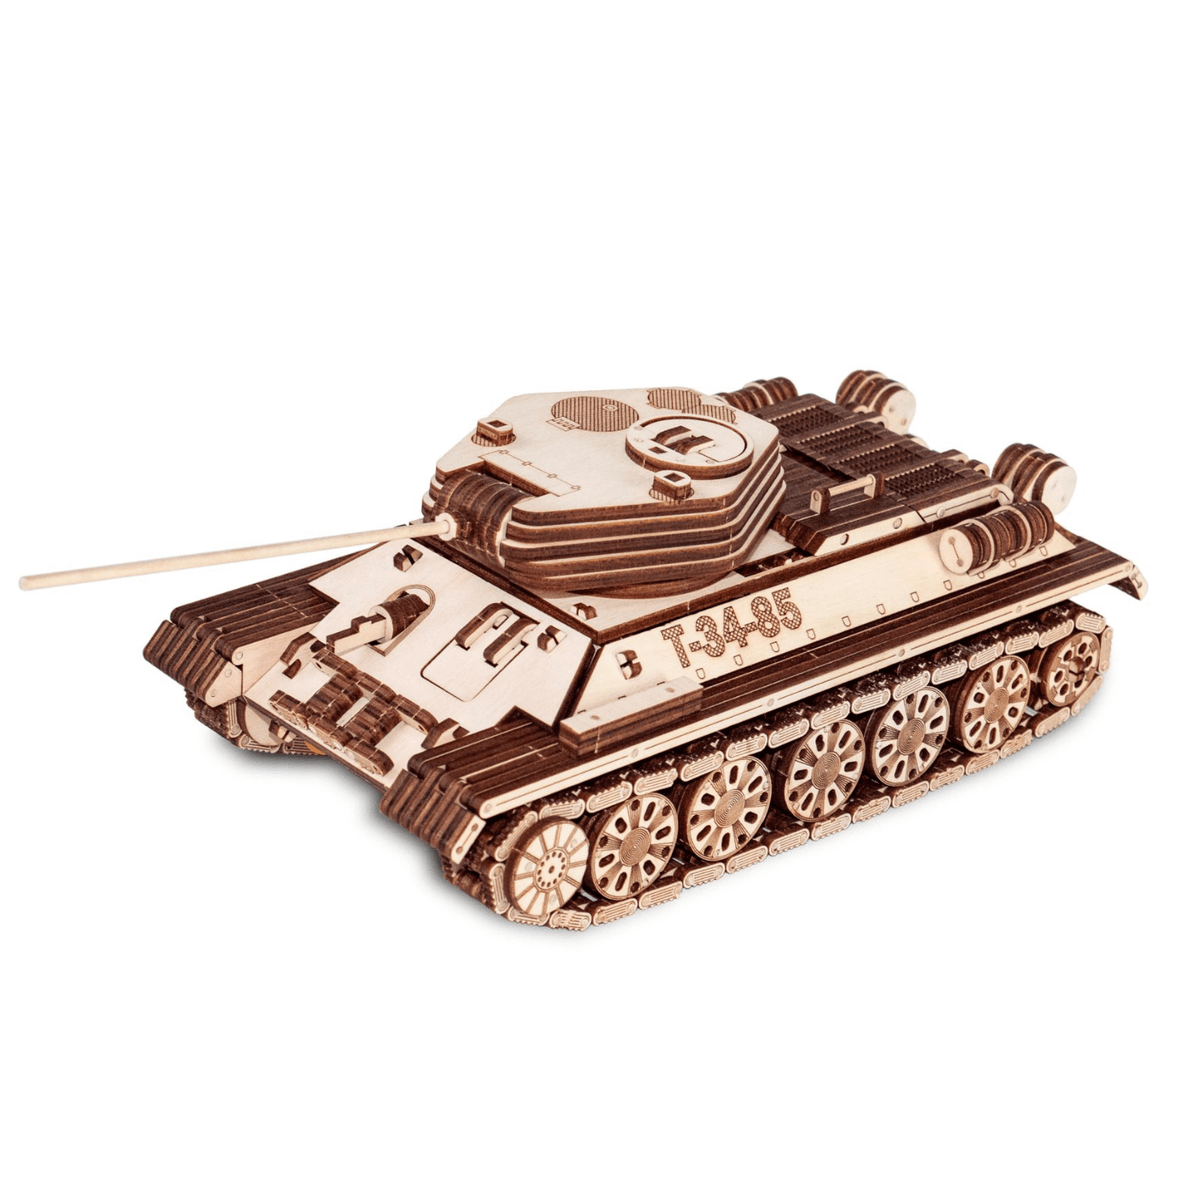 TANK T-34-85 | Tank Mechanical Wooden Puzzle-Eco-Wood-Art--